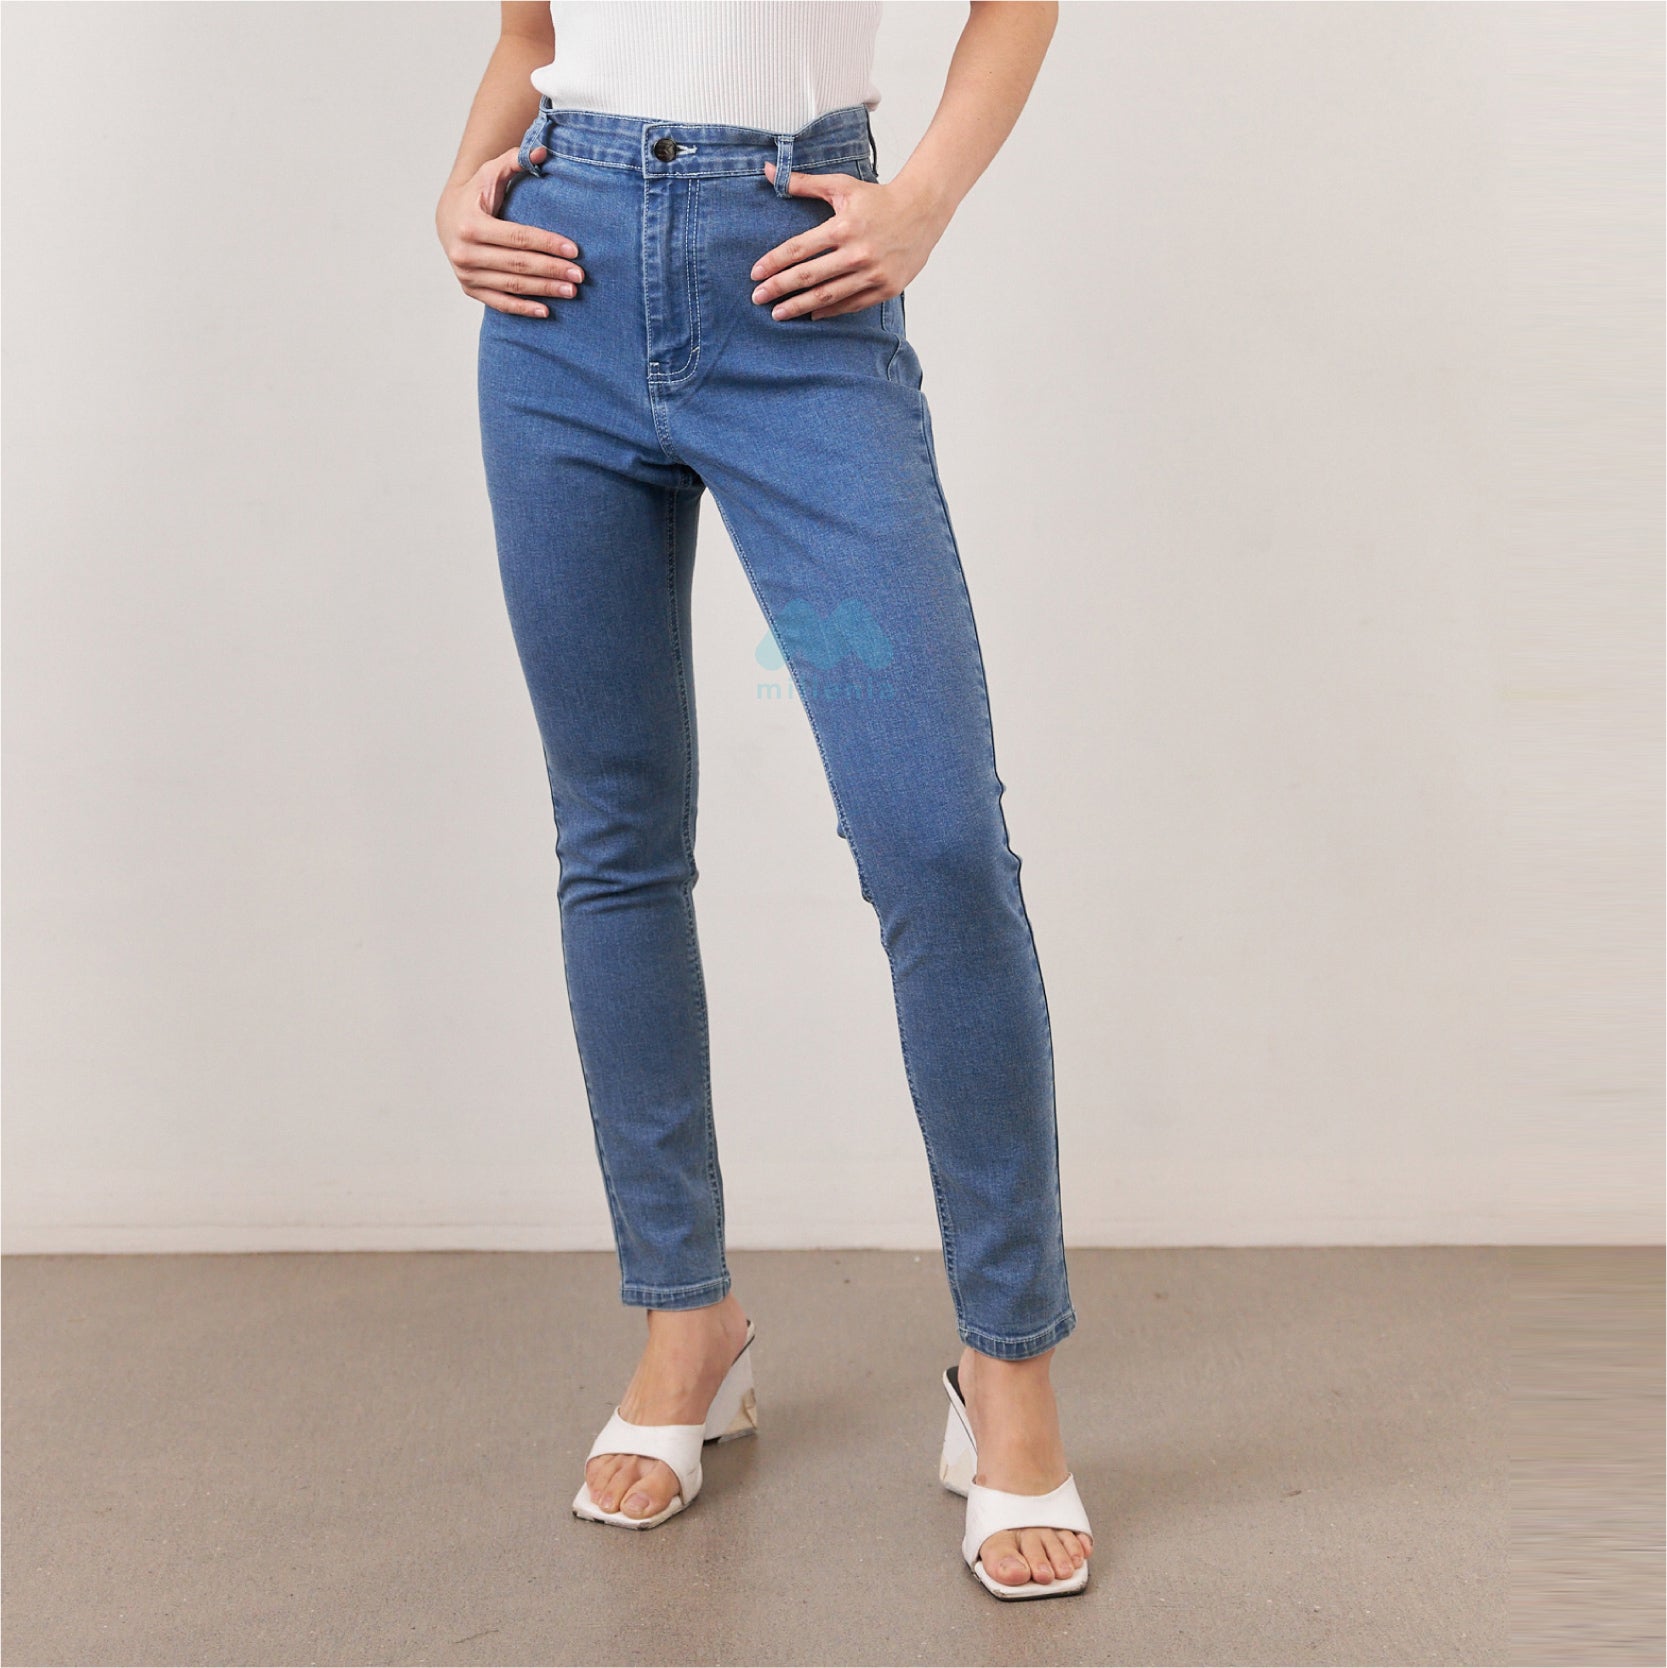 Sanny Jeans Wanita Skinny High Rise [MYMJ 01]